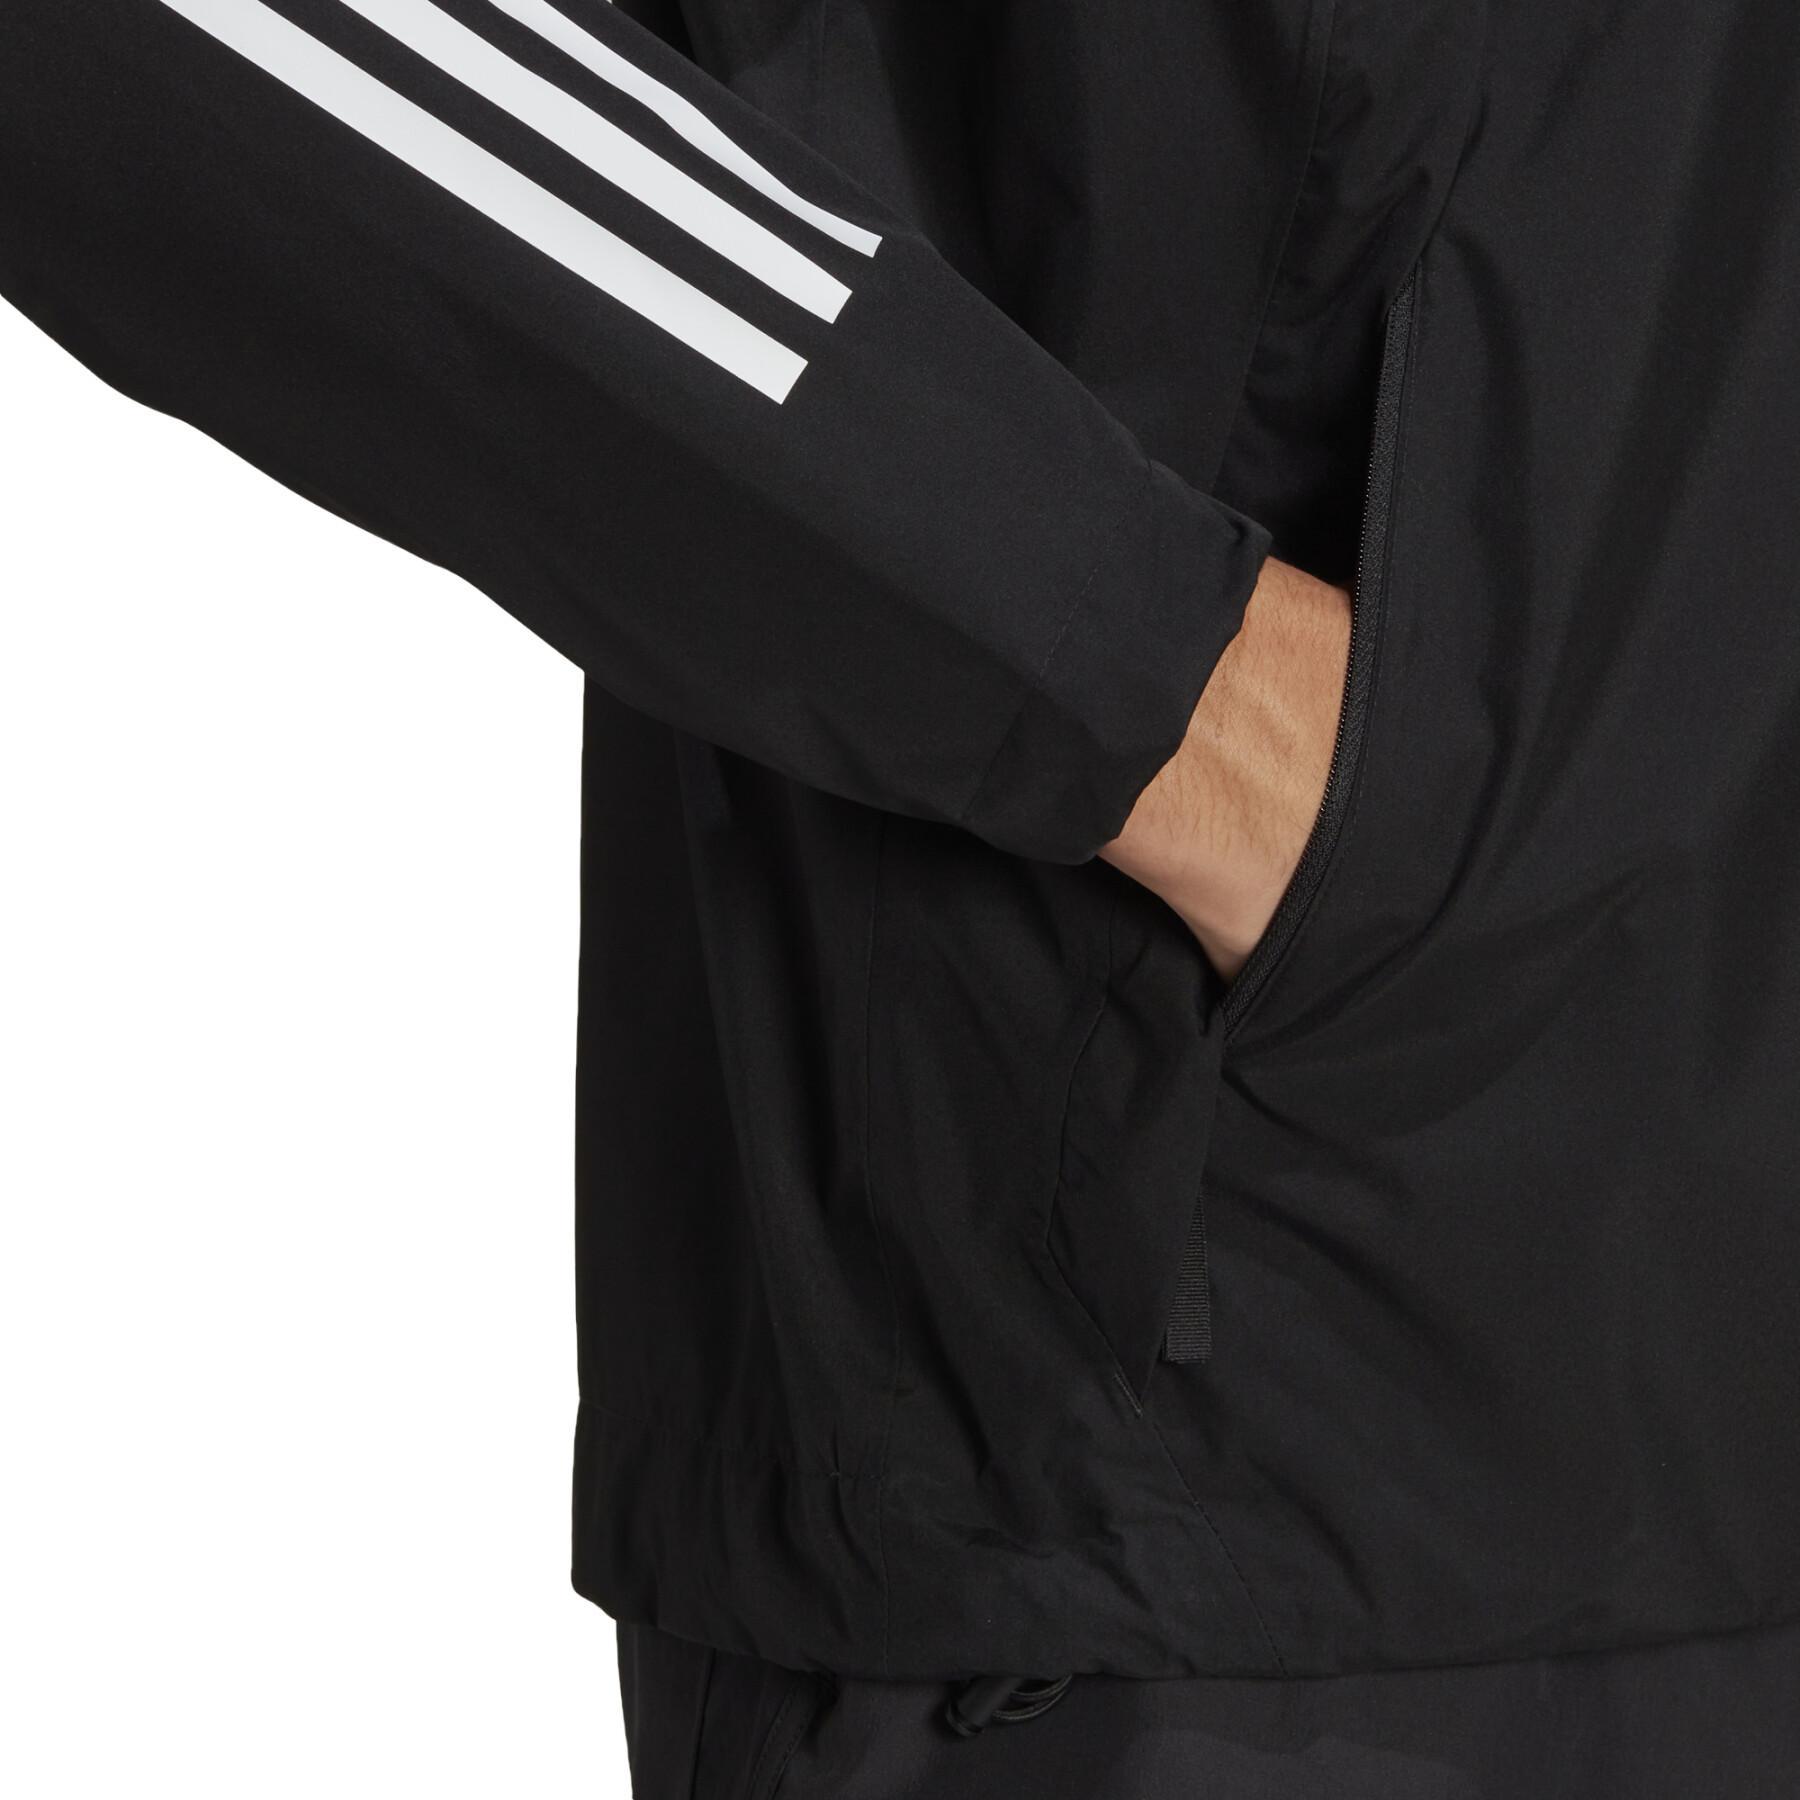 Jacket adidas BSC 3-Stripes RAIN.RDY - Jackets - Men's clothing - Lifestyle